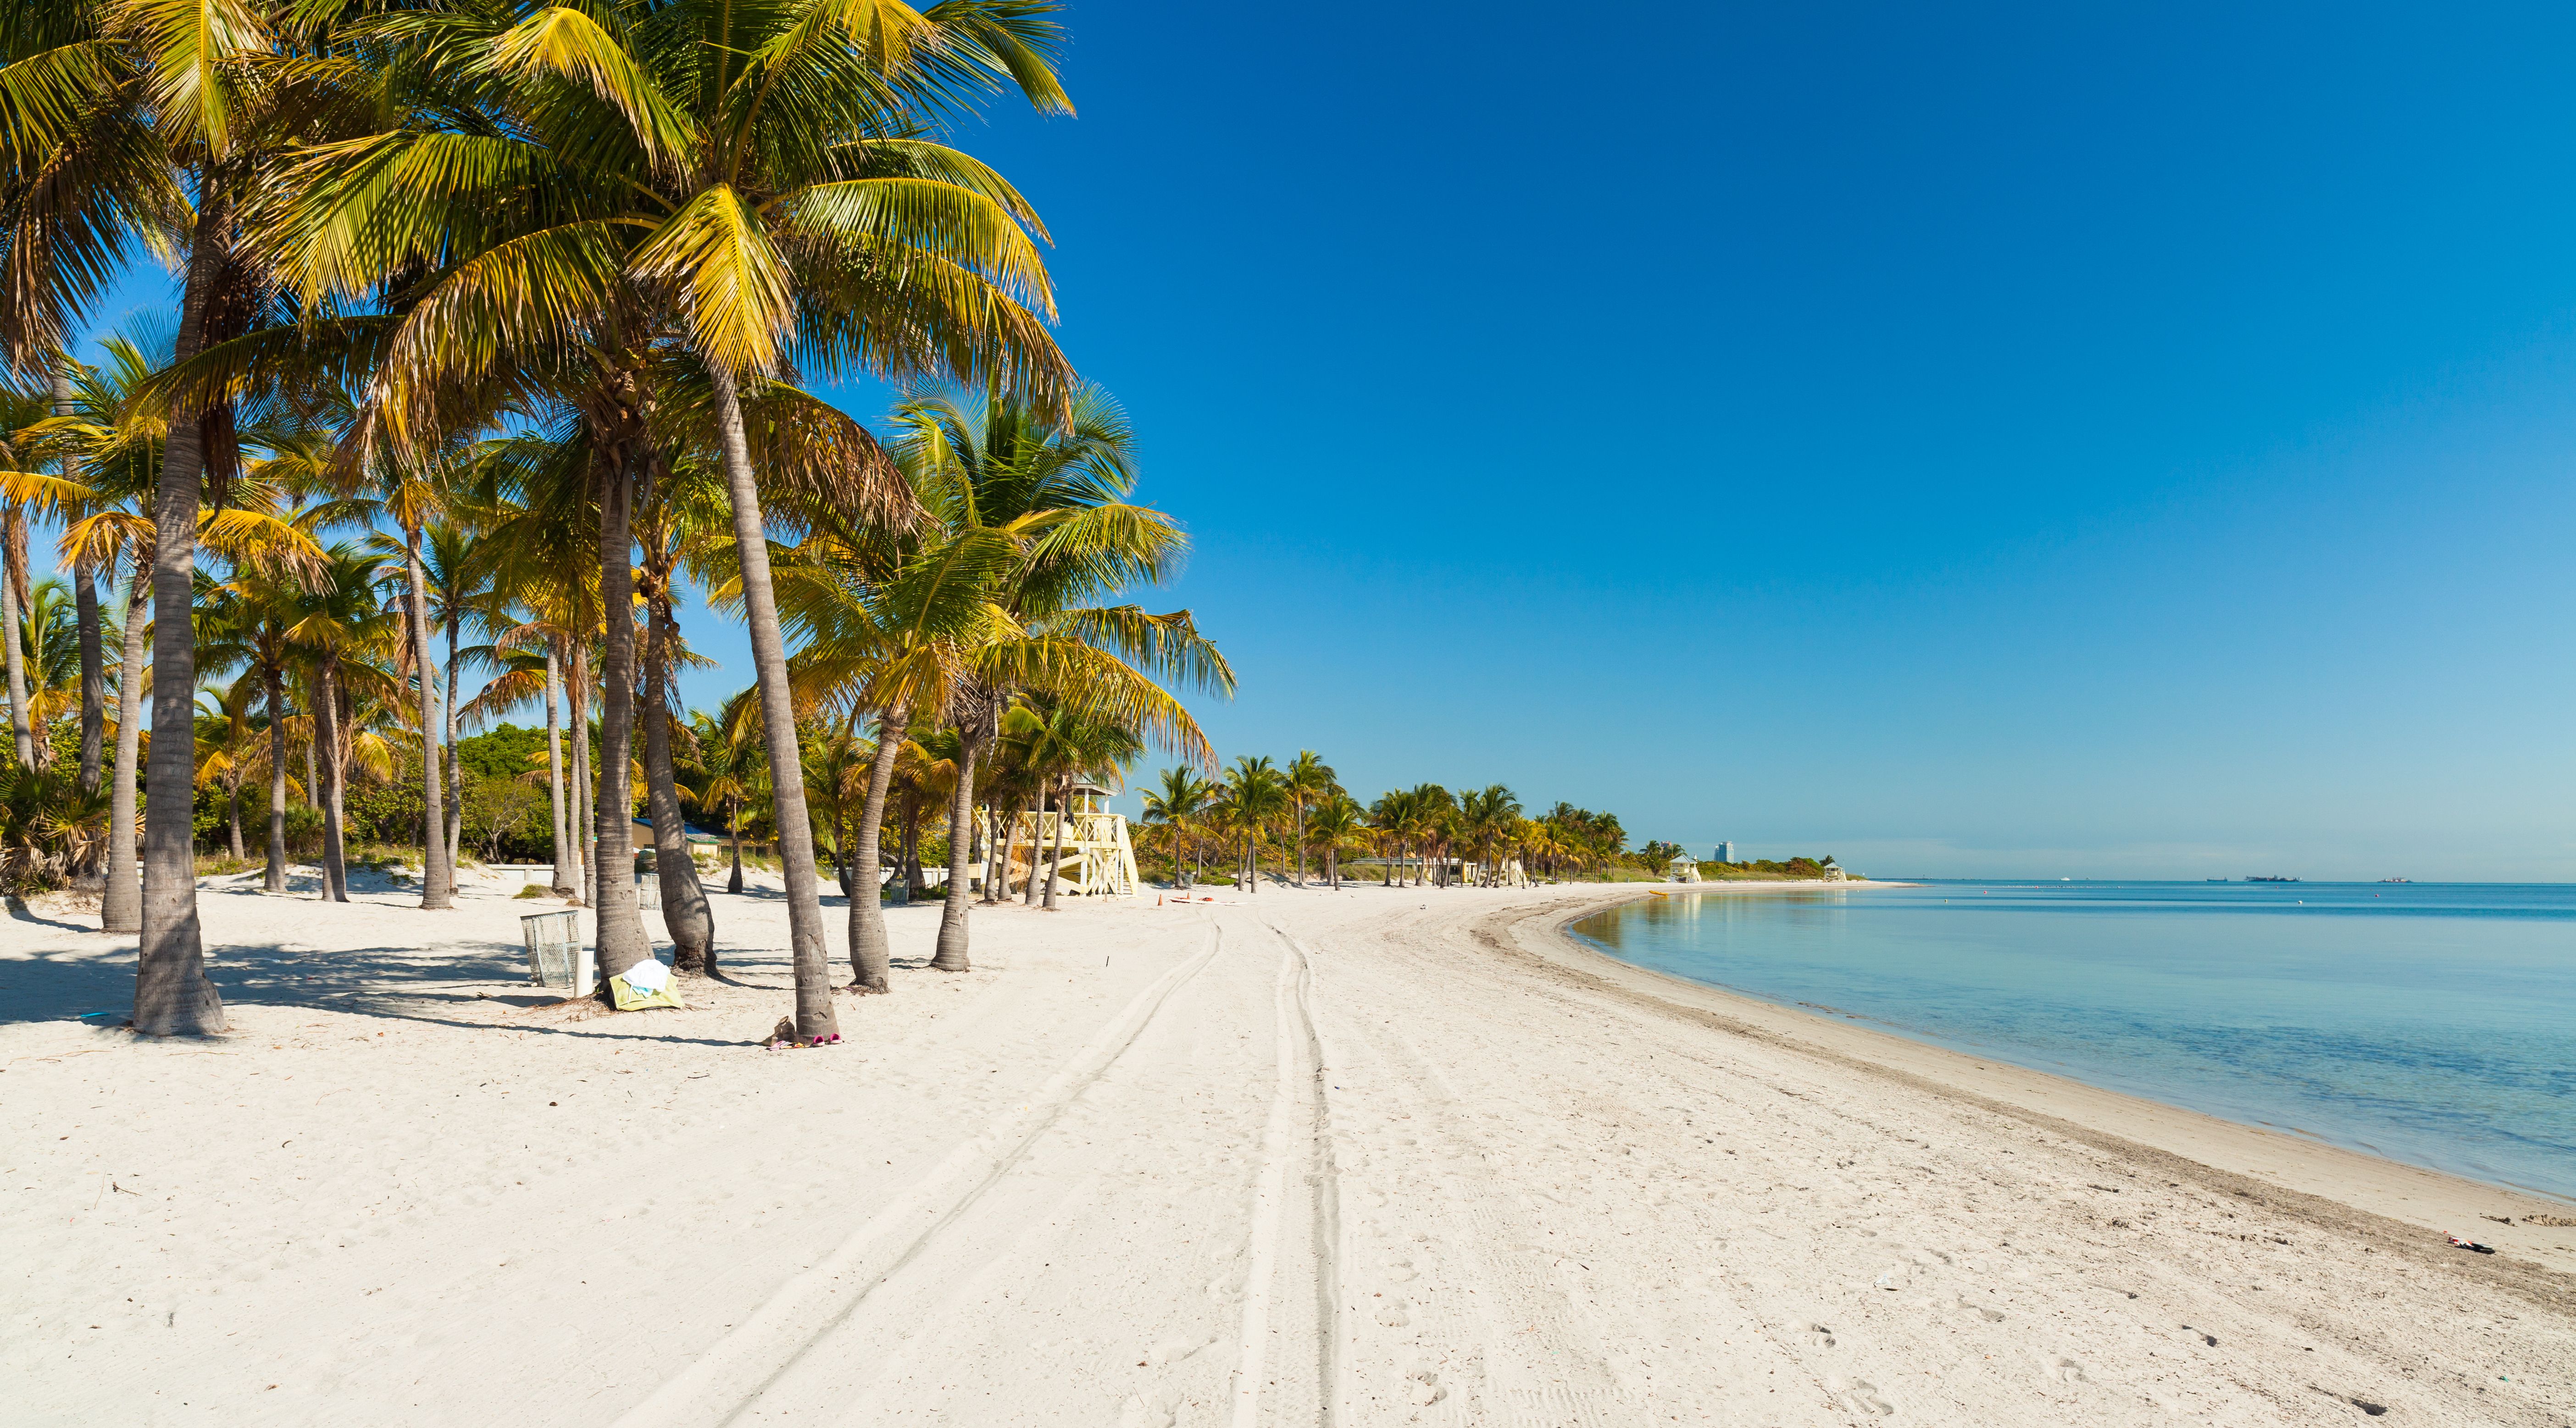 Crandon Park Beach located in Key Biscayne in Miami, Florida